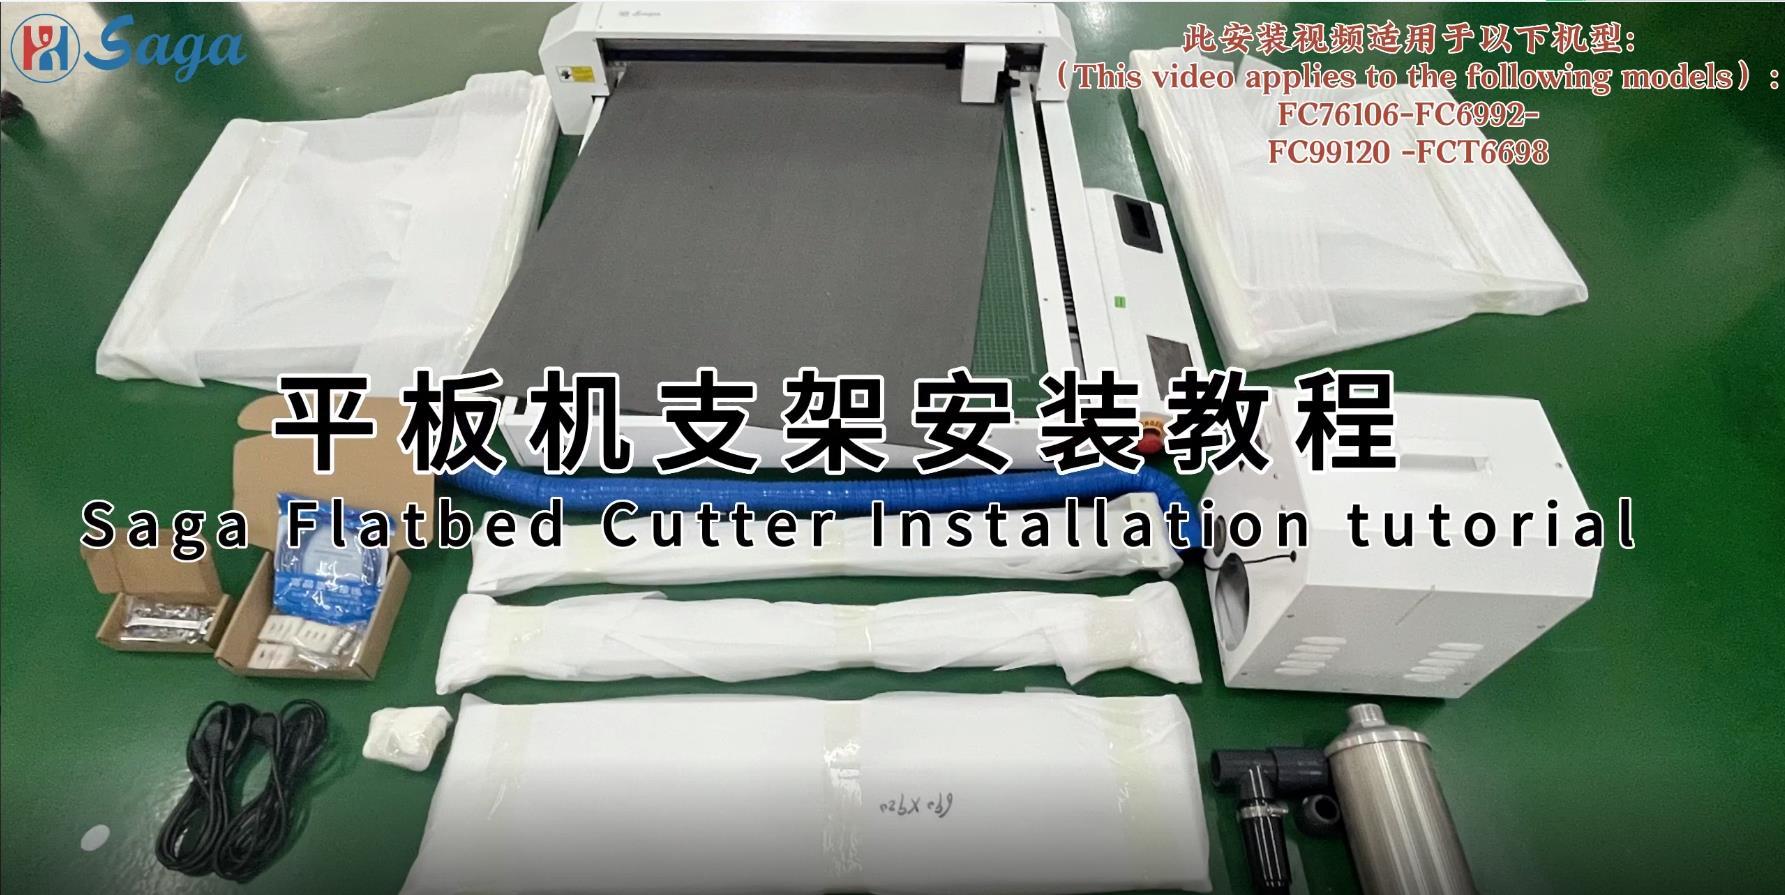 Saga Flatbed Cutter Installation tutorial